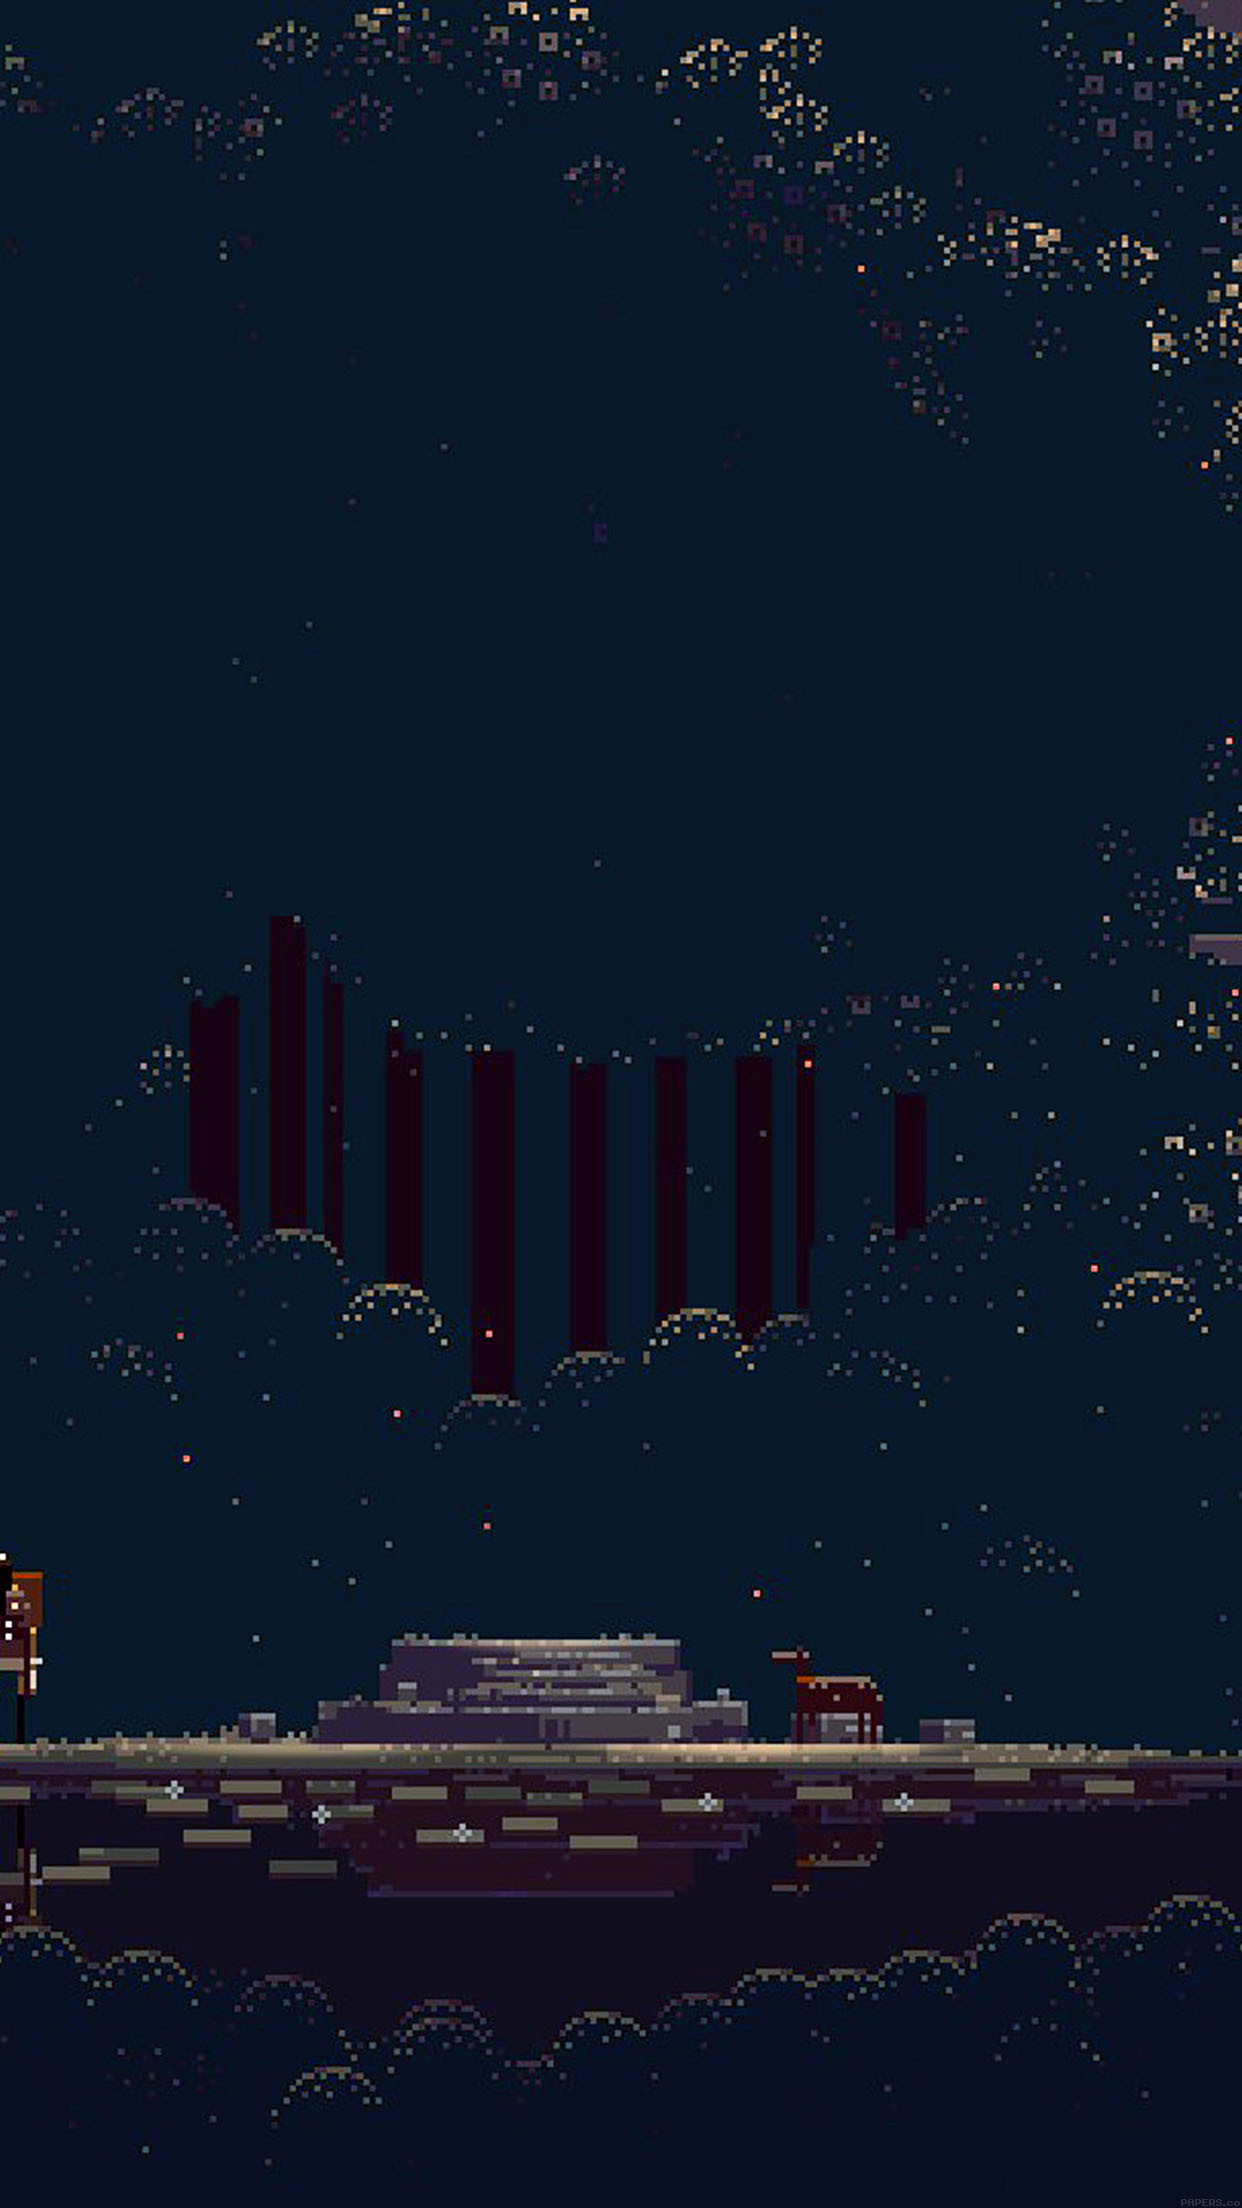 Wallpaper pixelated universe game 34 iphone6 plus wallpaper